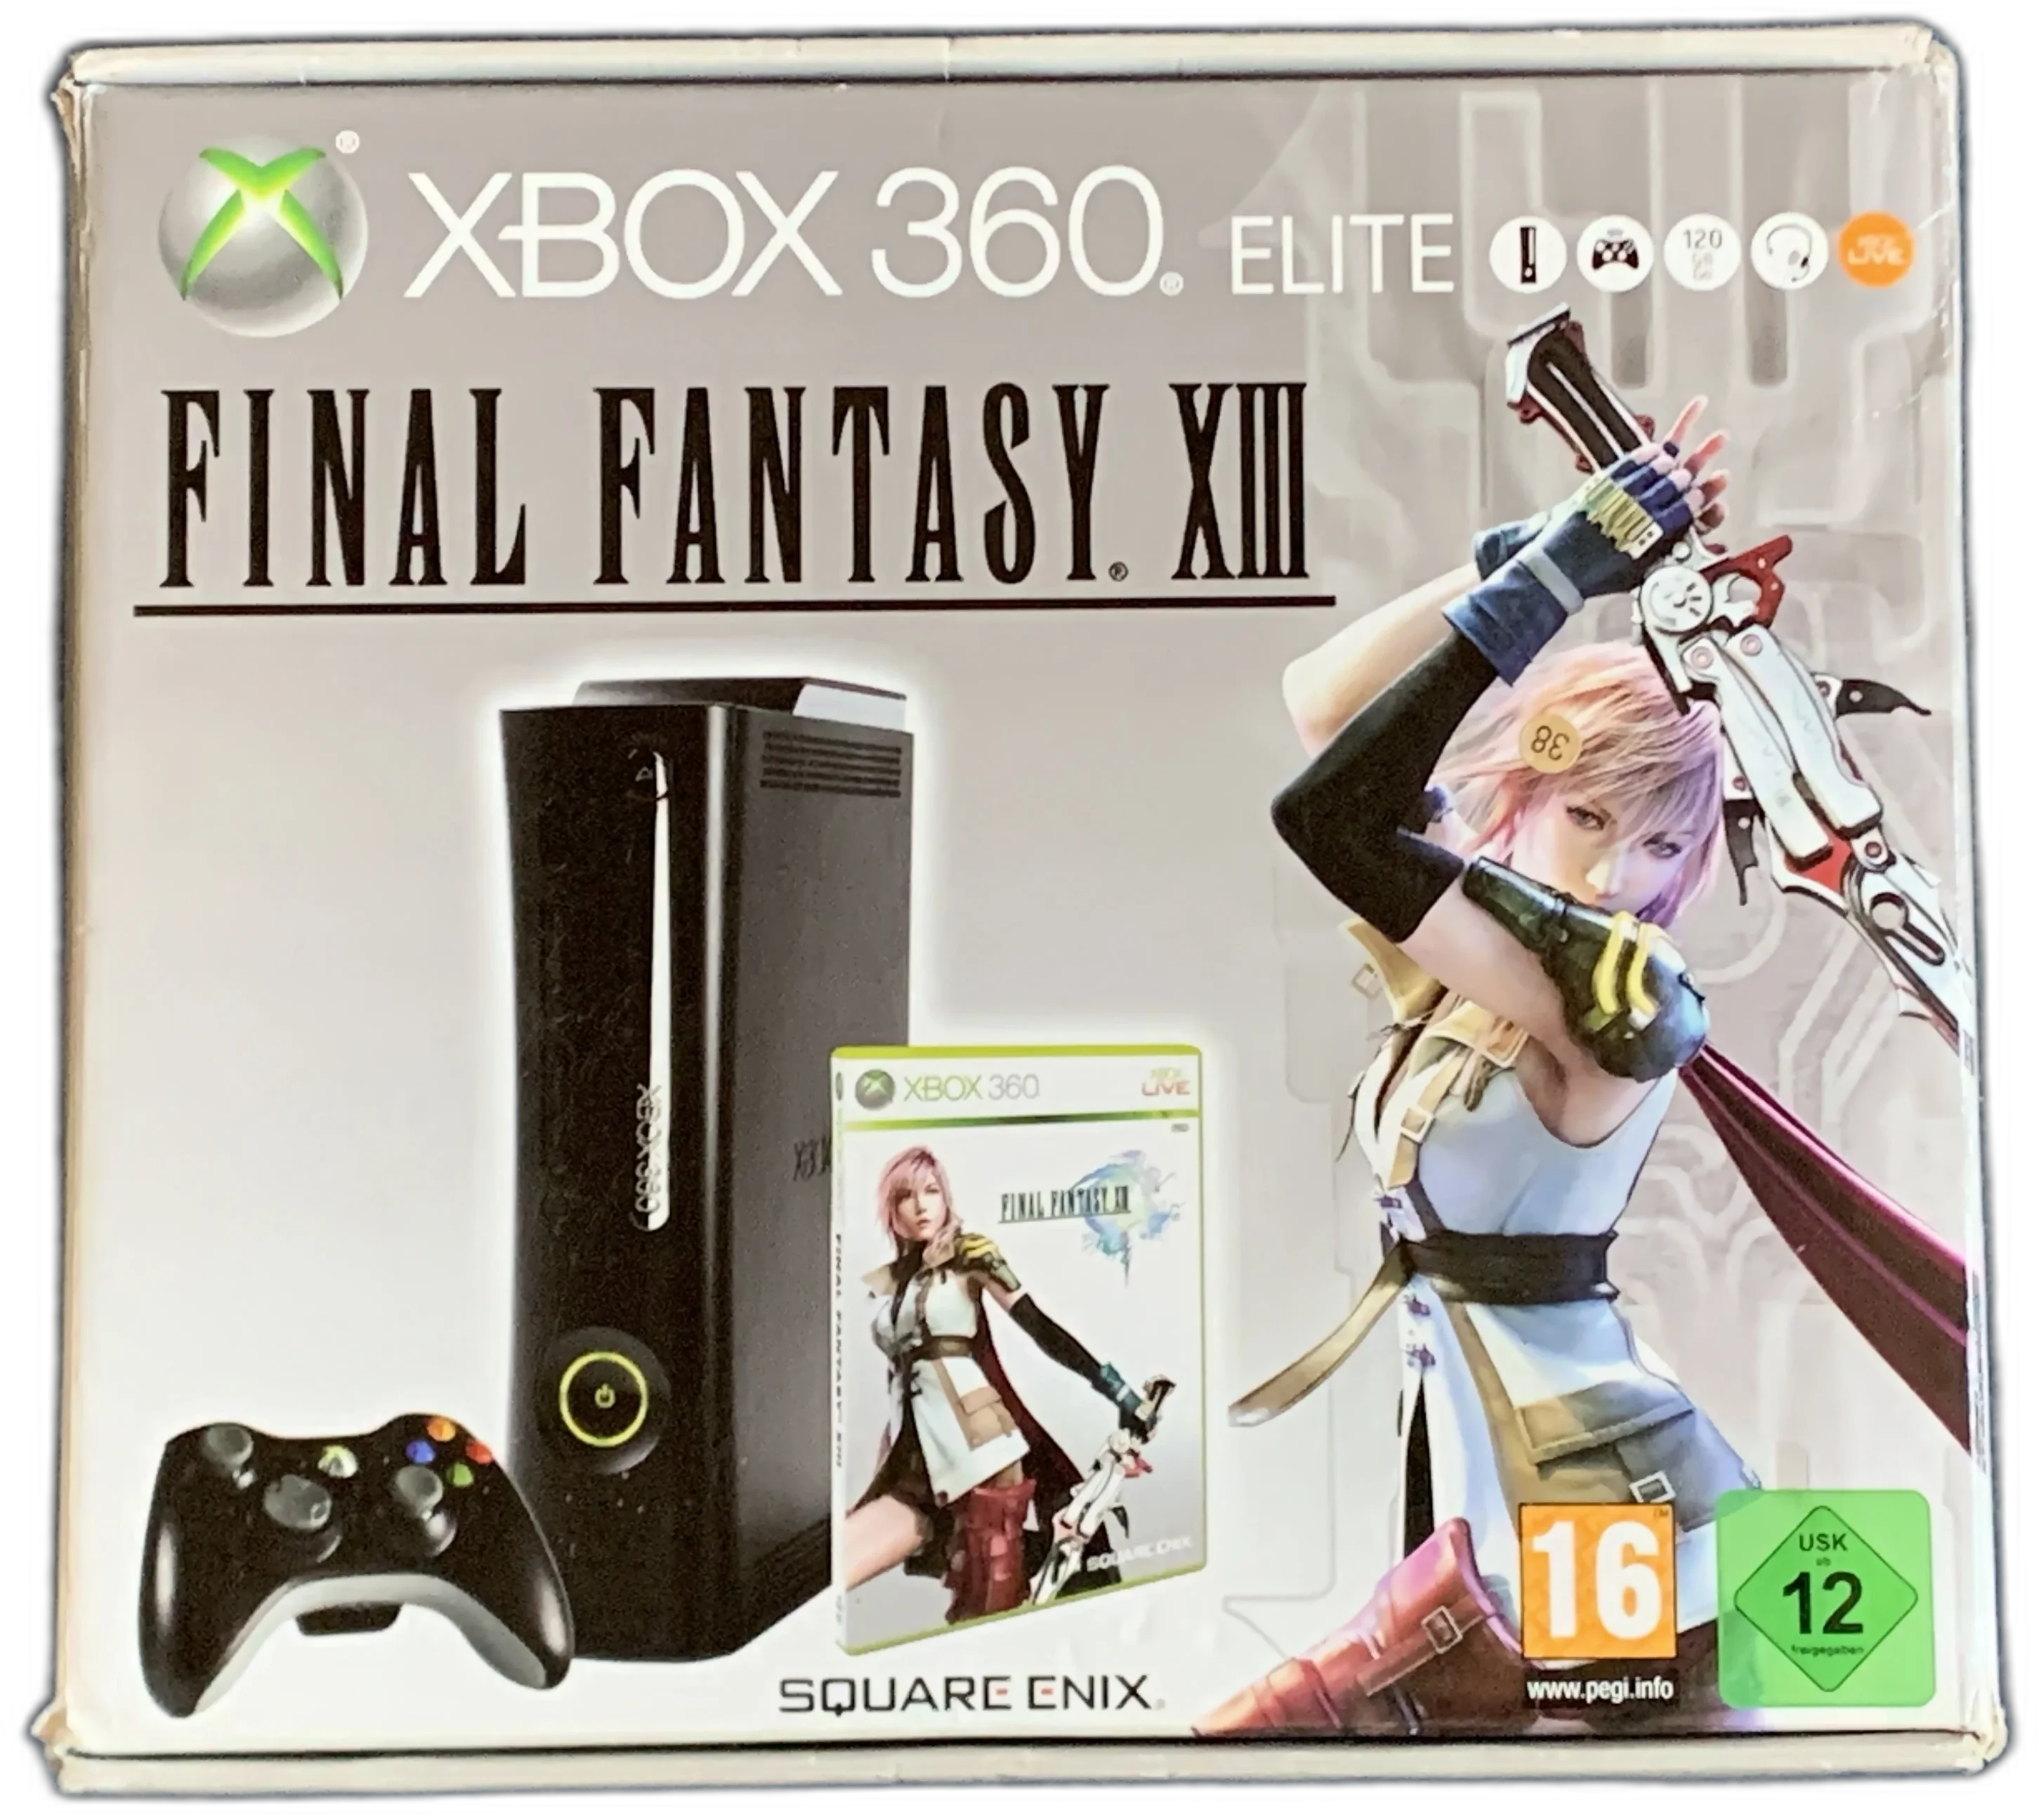  Microsoft Xbox 360 Elite Final Fantasy XIII Bundle